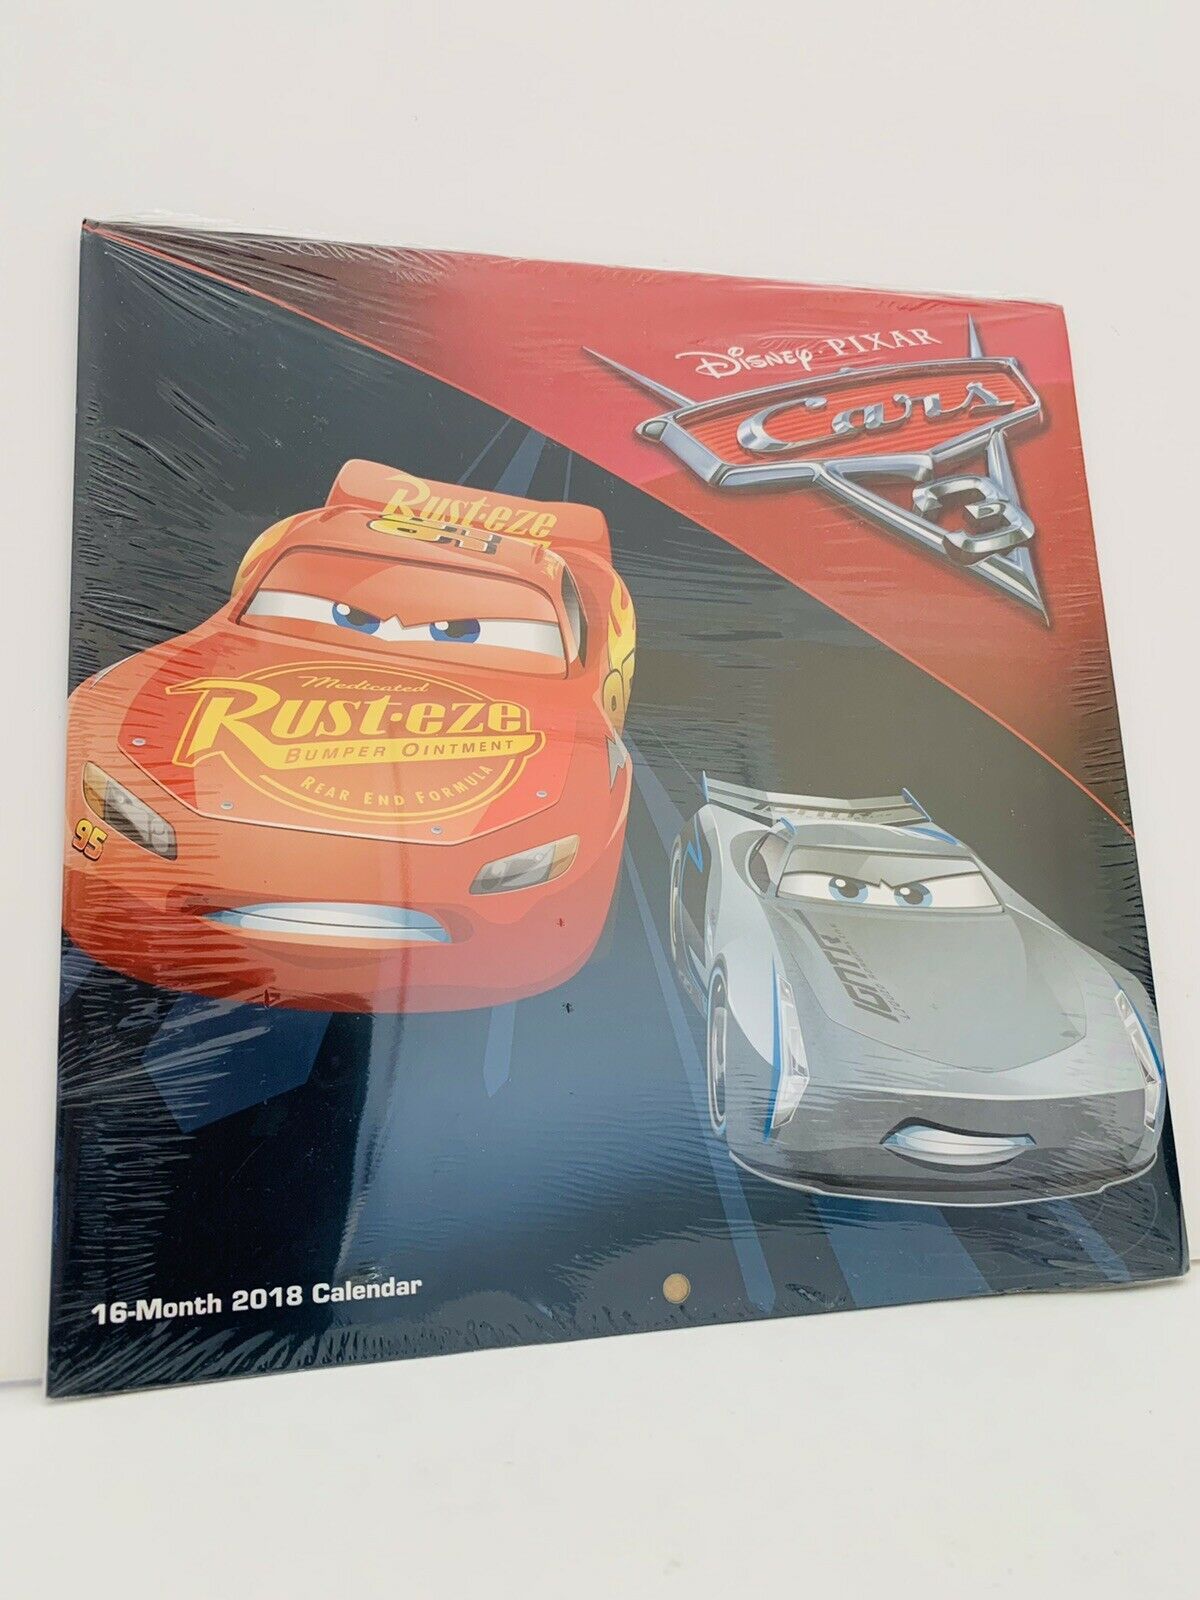 Disney Pixar Cars 3 16-Month 2018 Calendar *SEALED* - $7.91